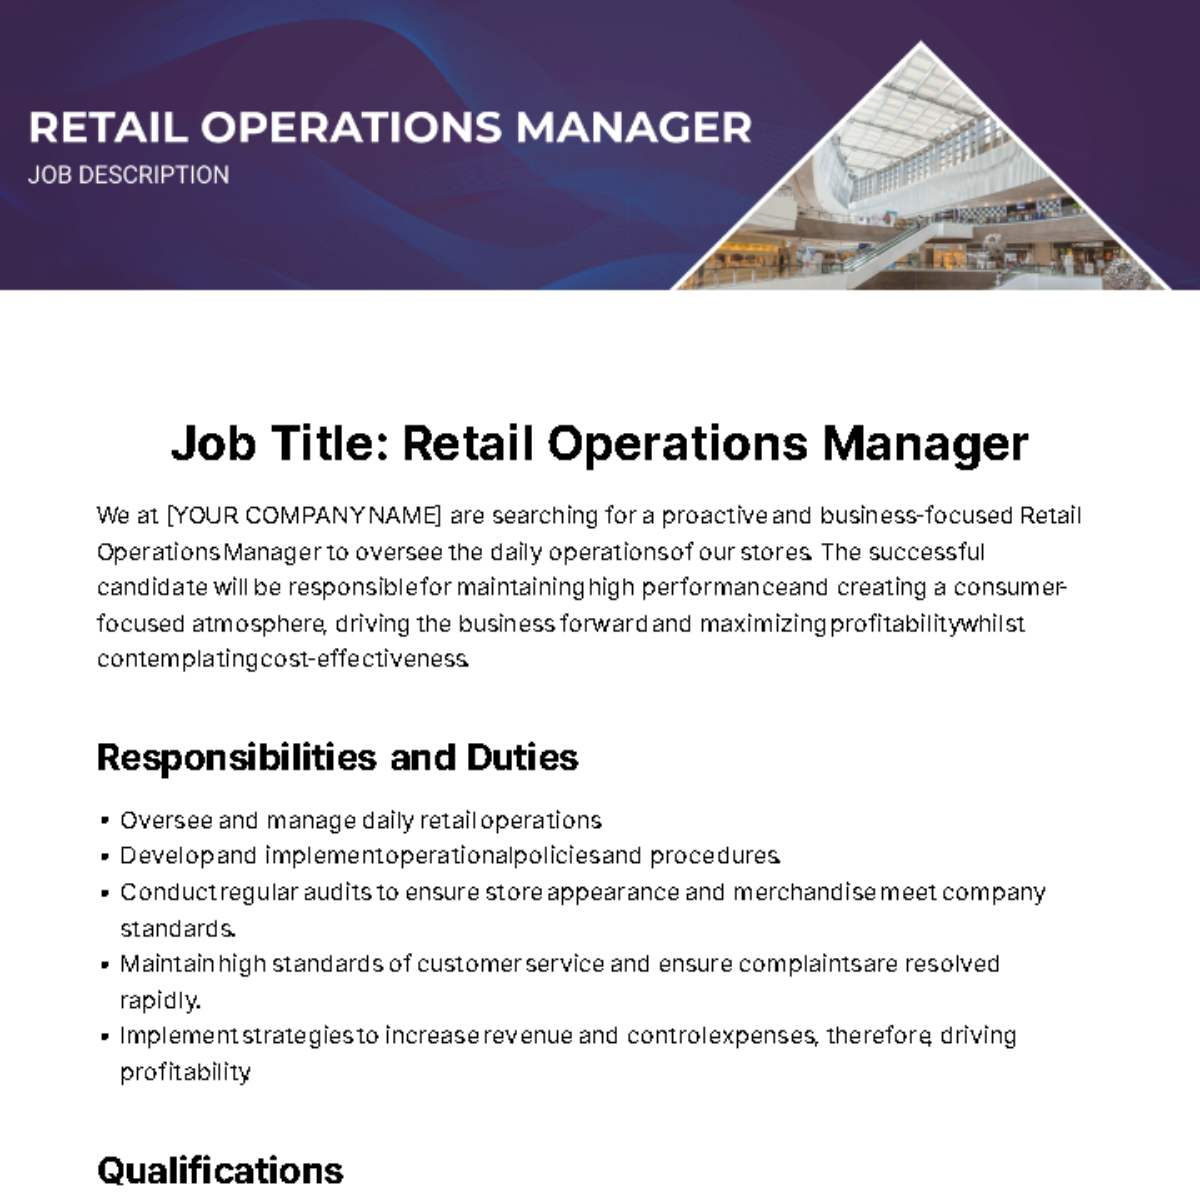 Retail Operations Manager Job Description Template